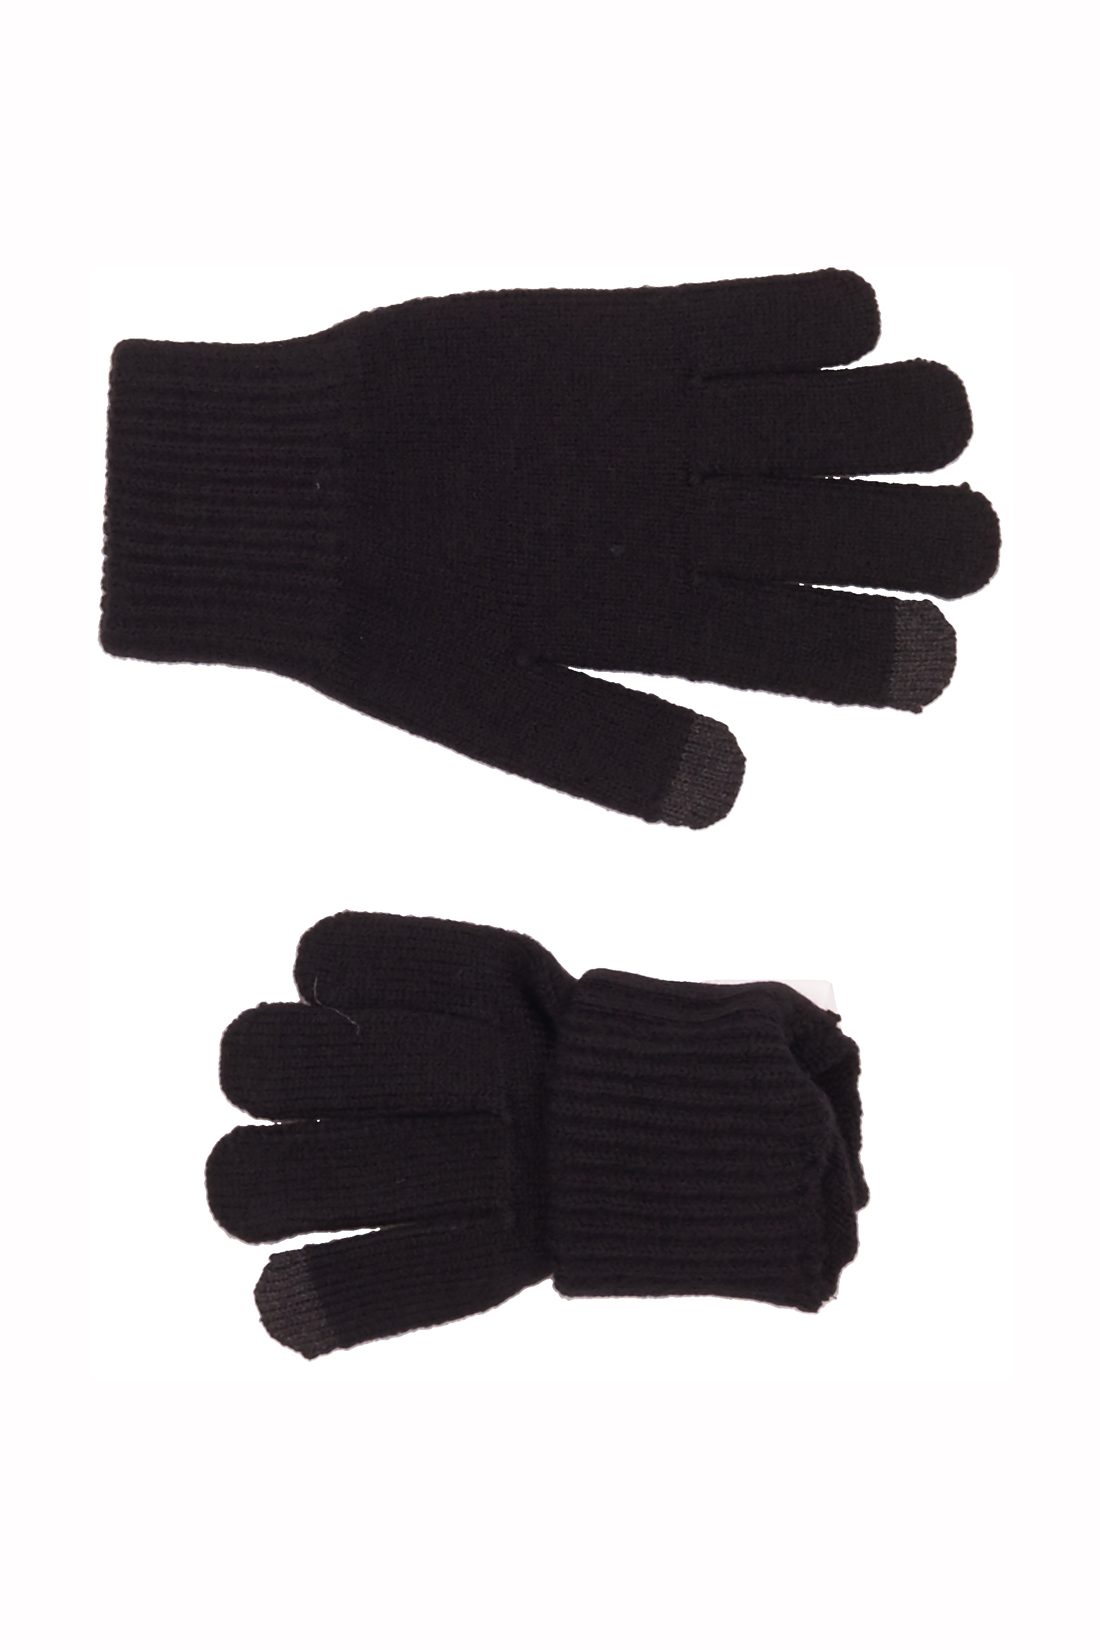 Перчатки (арт. baon B860505), размер Без/раз, цвет черный Перчатки (арт. baon B860505) - фото 3